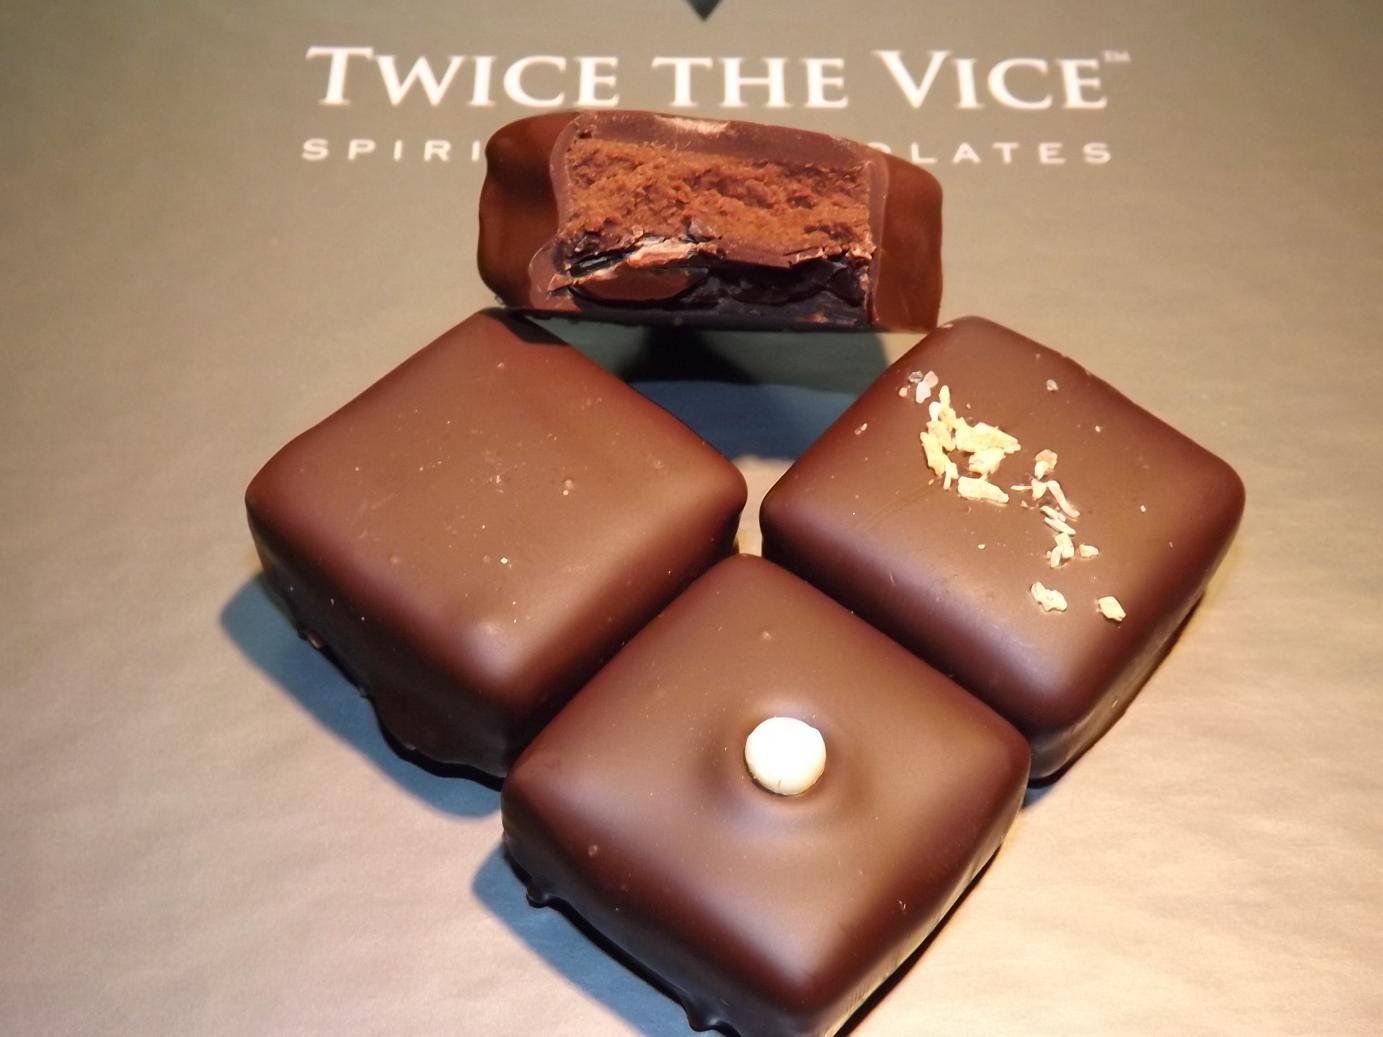 Twice The Vice sporited chocolates